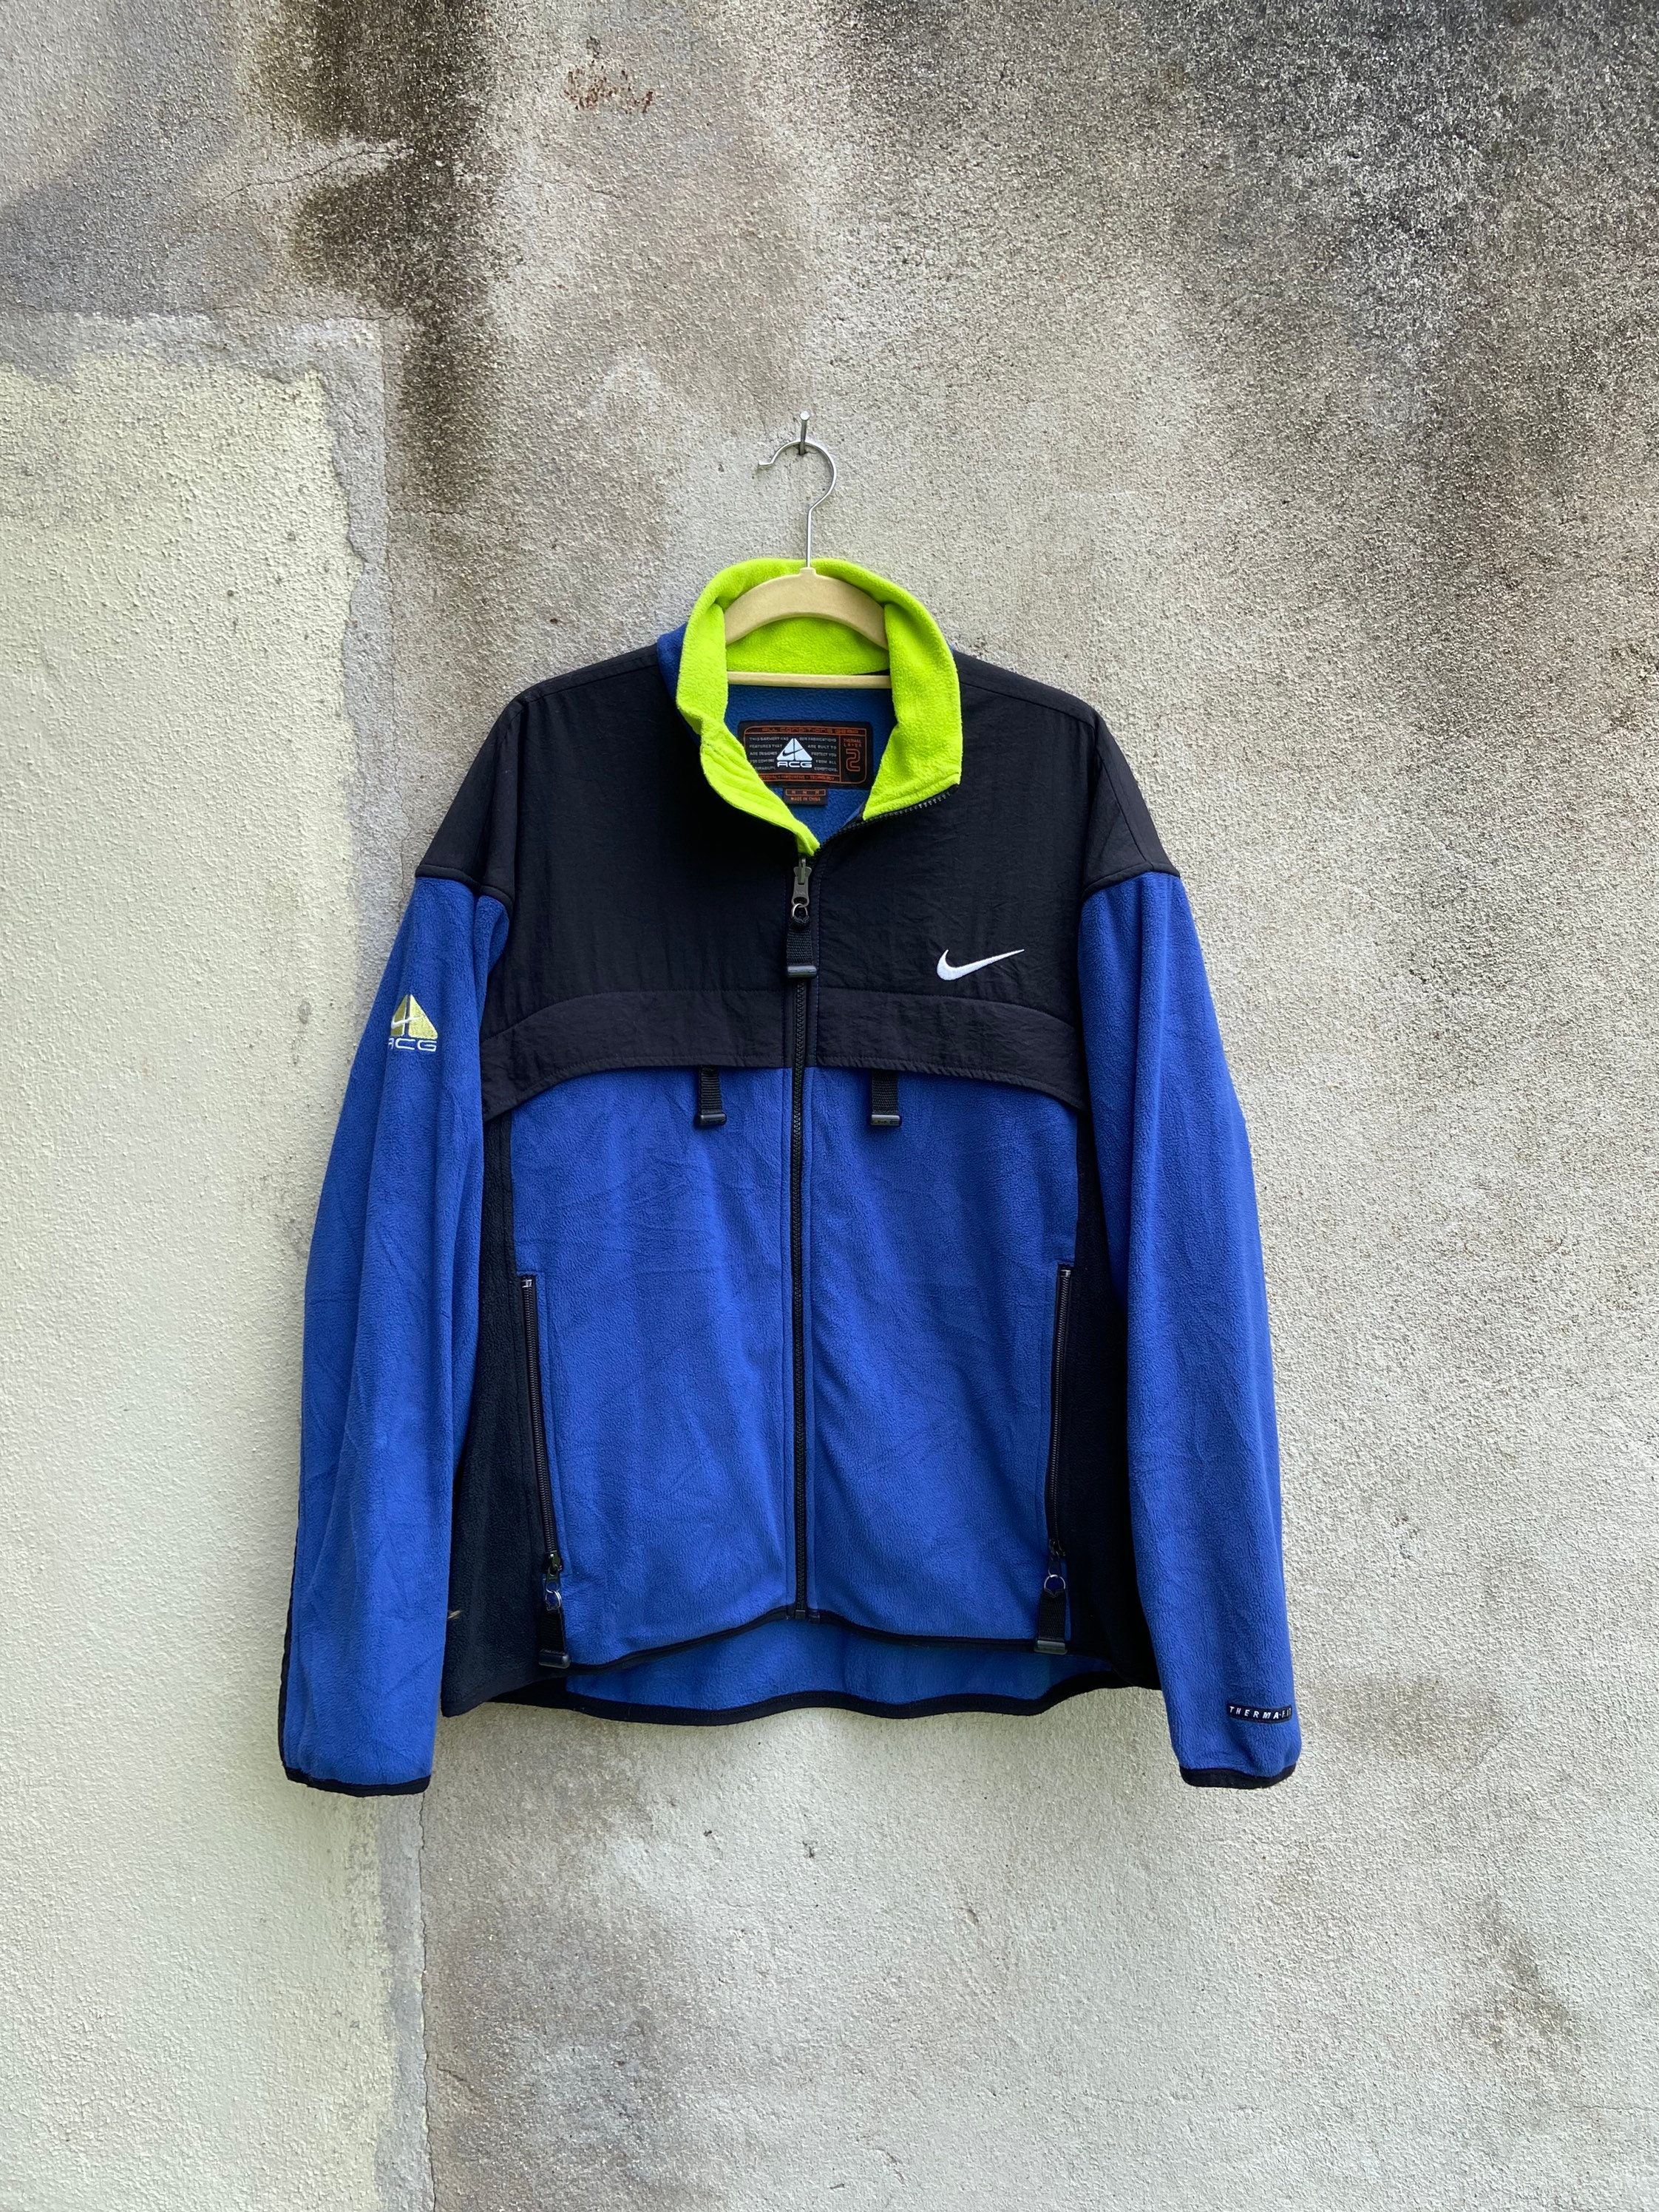 Vintage Nike Acg Fleece Jacket All Conditions Gear Size Medium | Etsy